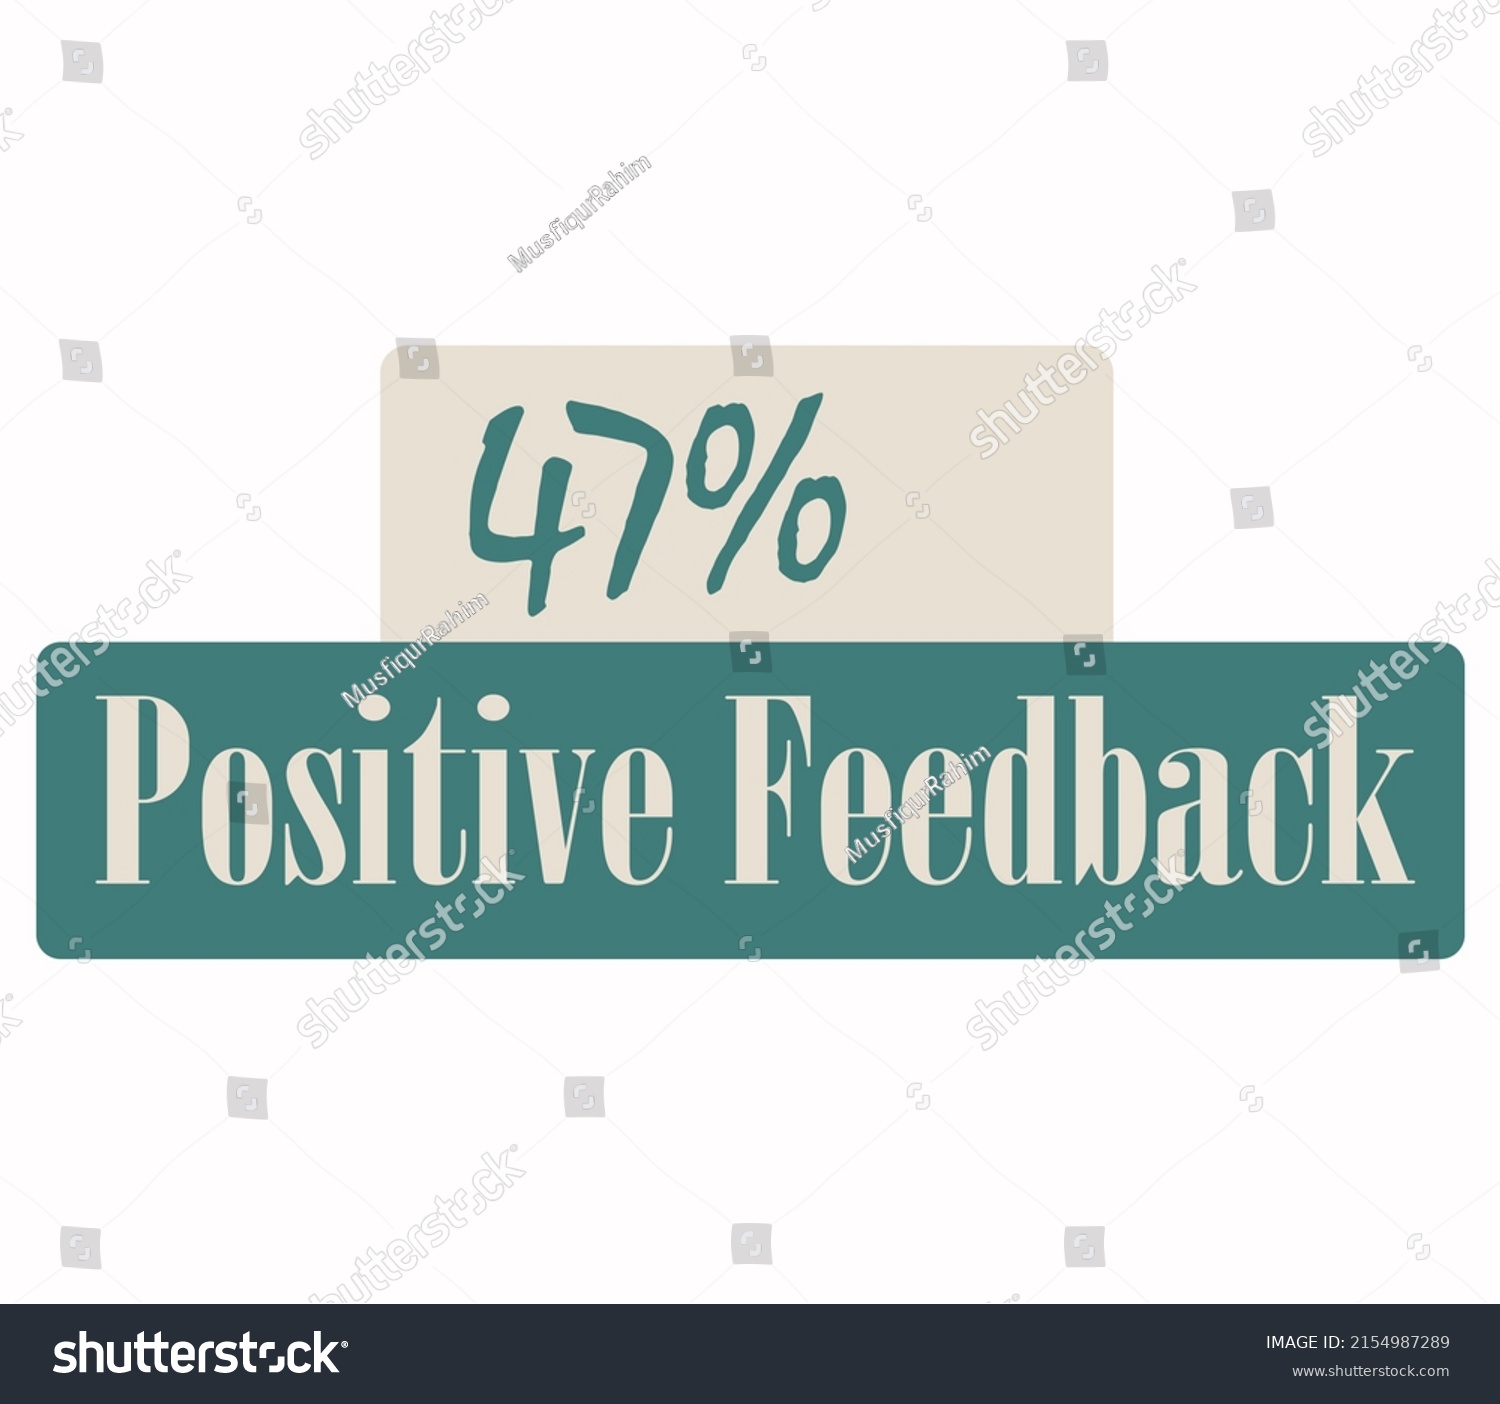 47% percentage positive feedback sign label vector art illustration with fantastic serif font and green color #2154987289